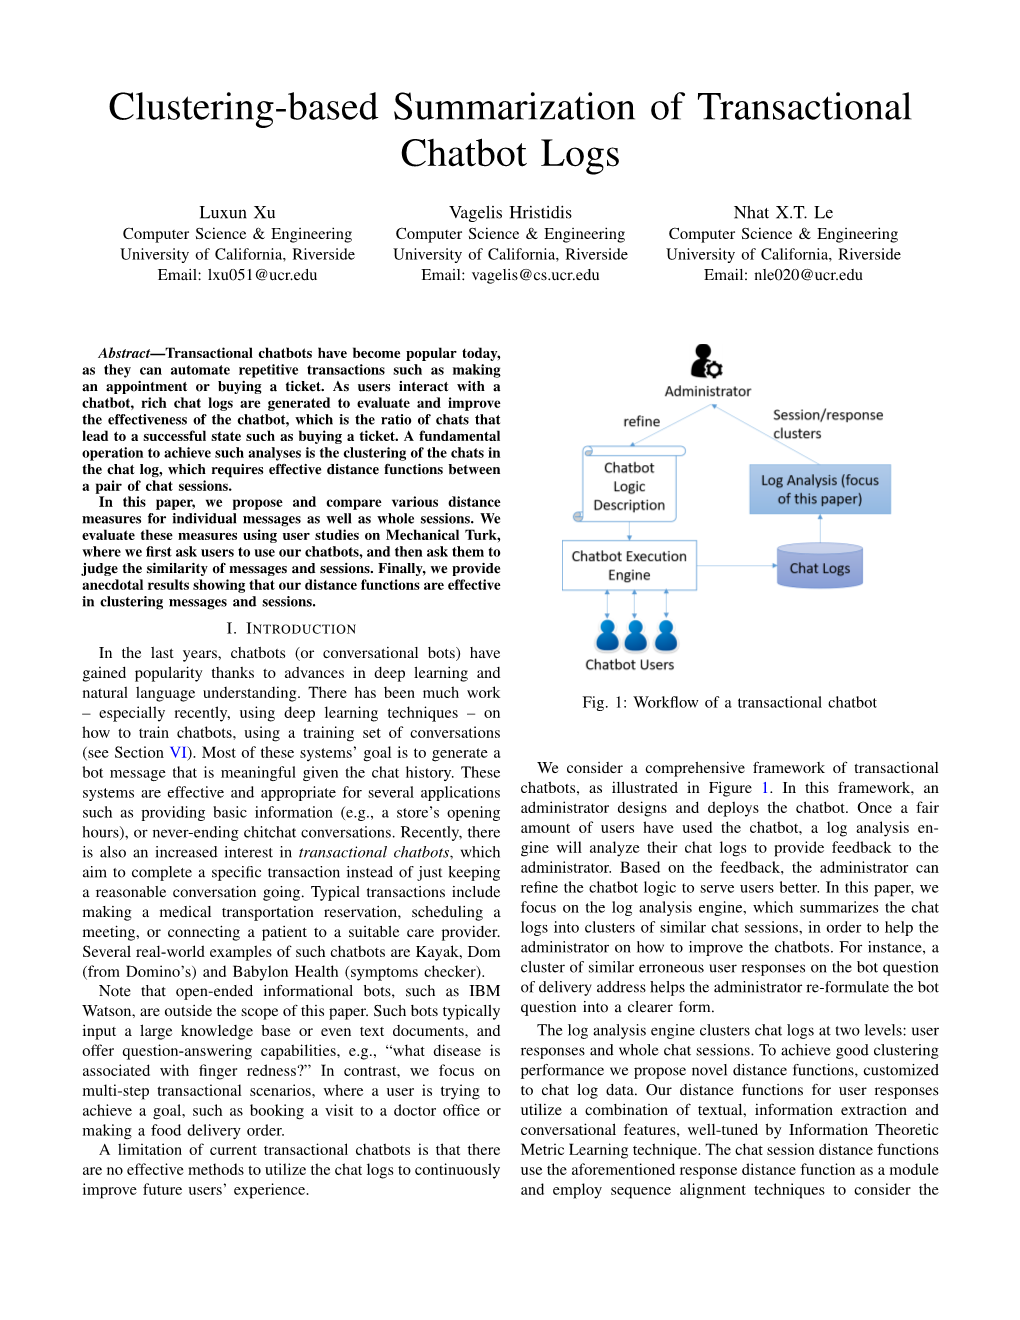 Clustering-Based Summarization of Transactional Chatbot Logs